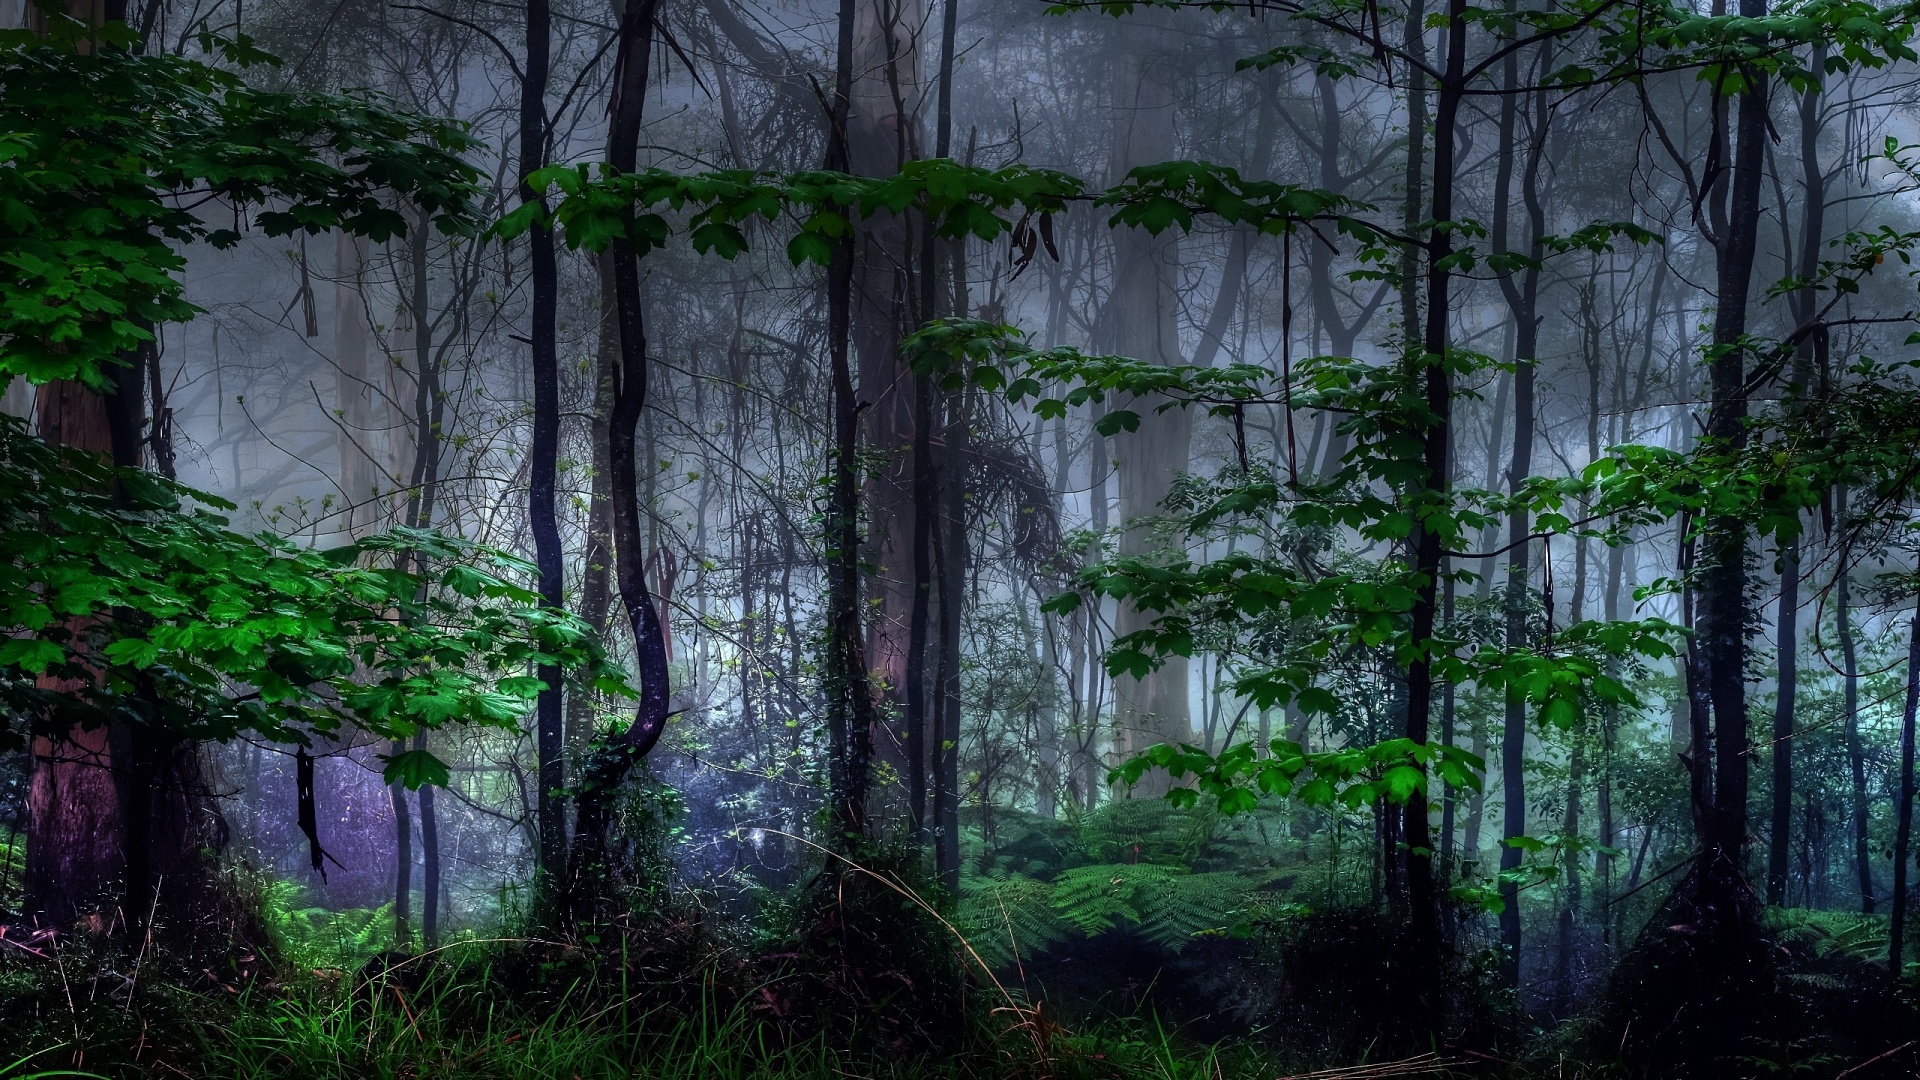 https://blogger.googleusercontent.com/img/b/R29vZ2xl/AVvXsEiyDg_iEeN2OZ_ATCkF9WsoErkcy01Z5oonlCan8mciIcjHTsT3rPspkMxffgVKMeJV1S9nZtq0RG2MPZRDedBBfPwHJZkWbeBsHYyrwPon1UMksrB4xky0AMu_lJtdApifyHqW7eIjzSHR/s0/nature-trees-dark-forest-mist-1920x1080.jpg